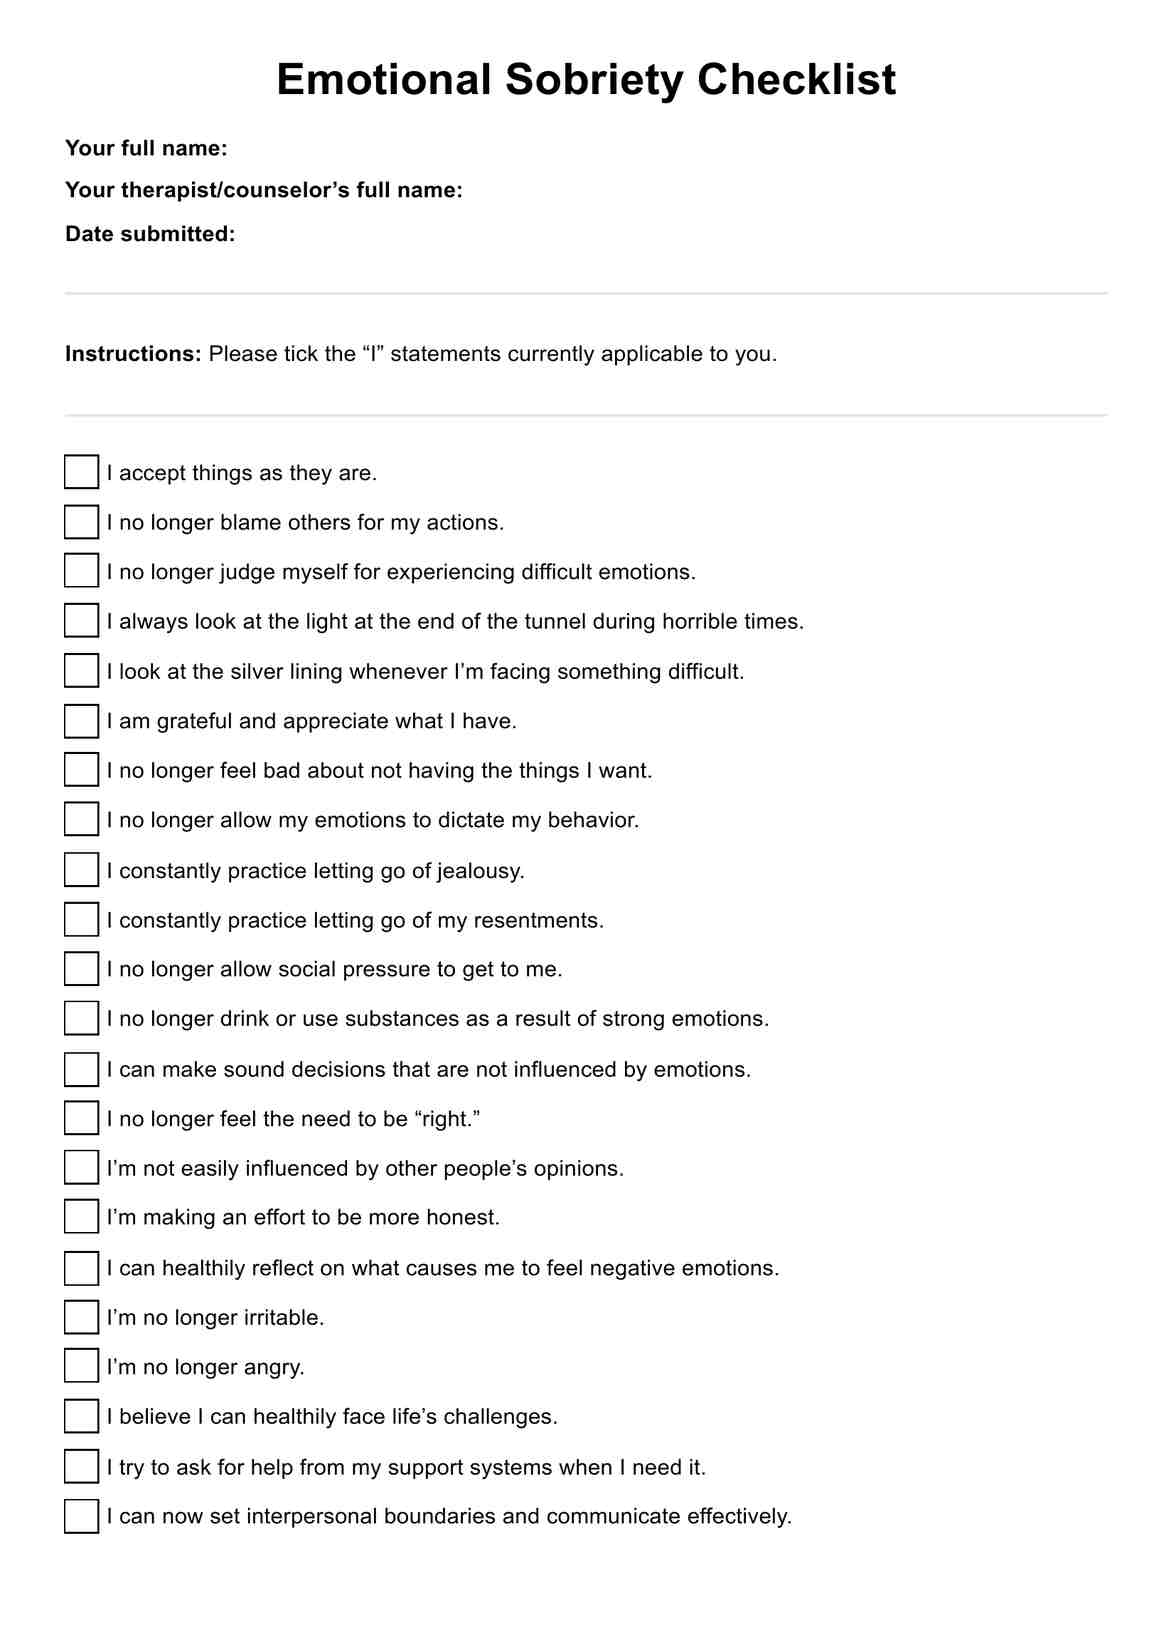 Emotional Sobriety Checklist PDF Example